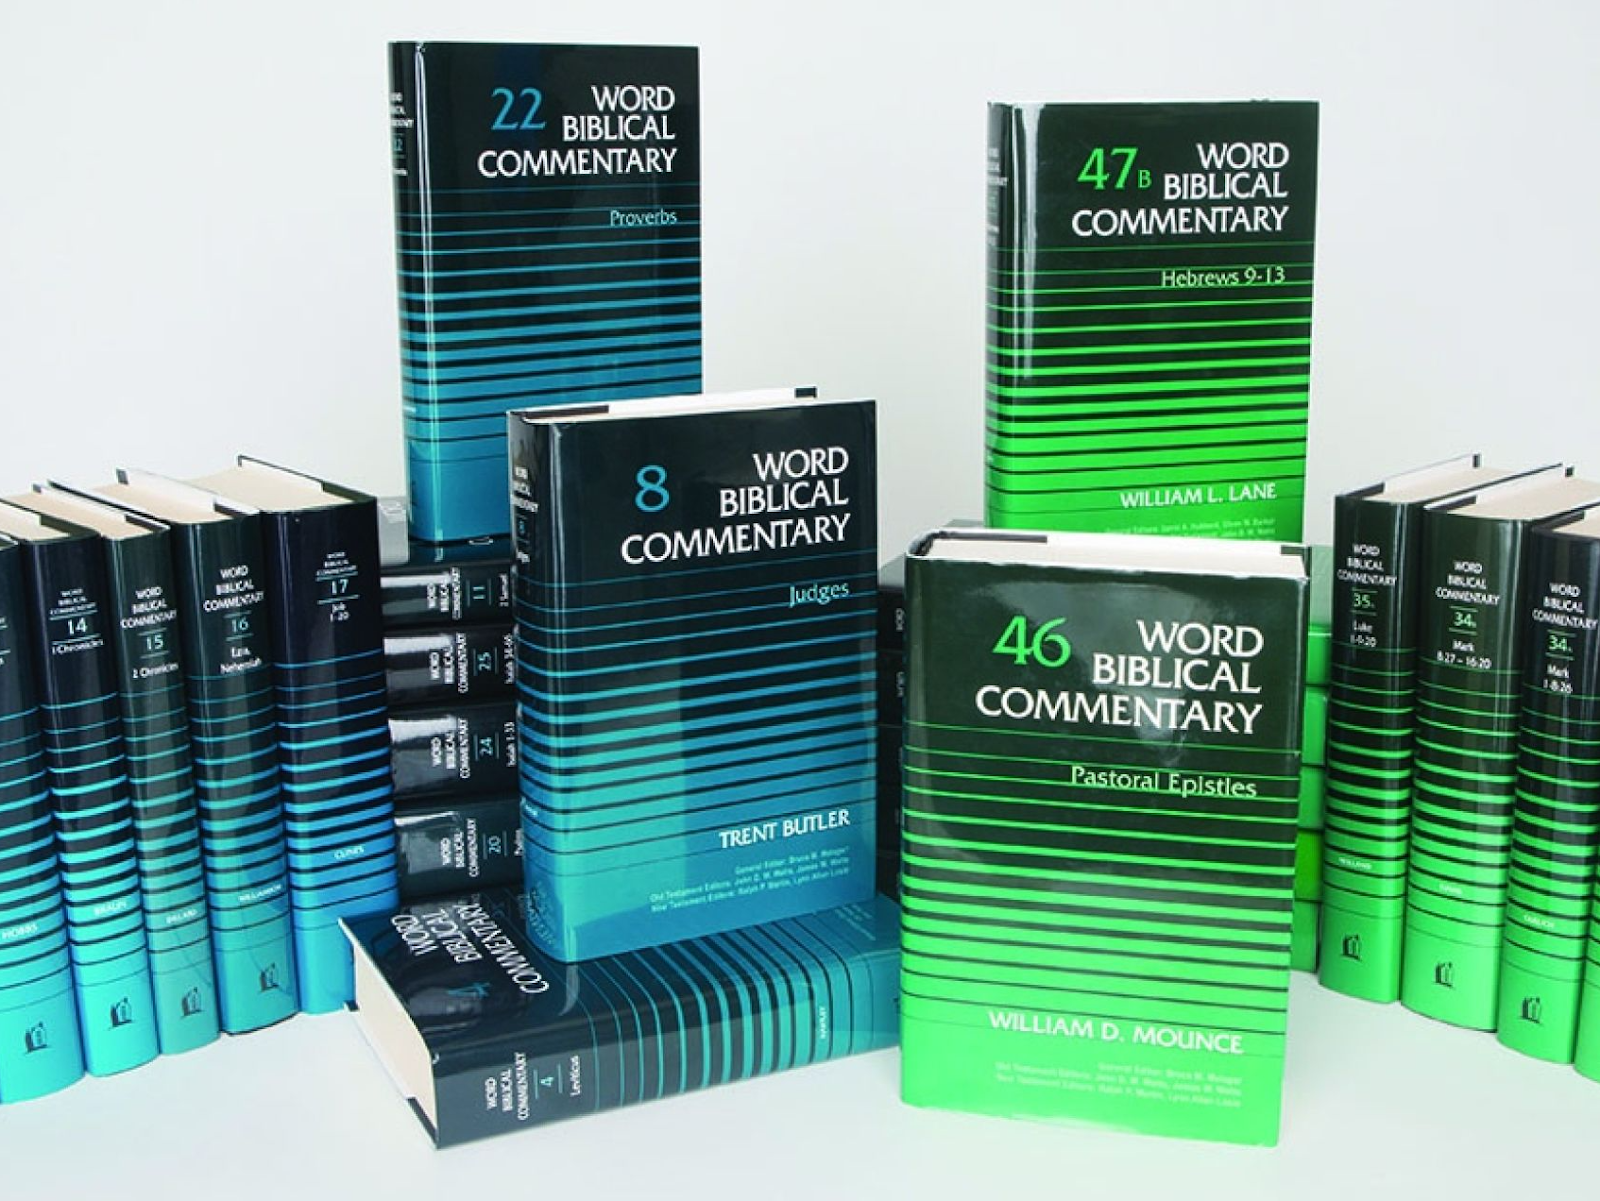 Several WBC books stacked together

對聖經研究領域的基督教學者而言，Word Bible Commentaries（WBC）以其專業性聞名於世。
